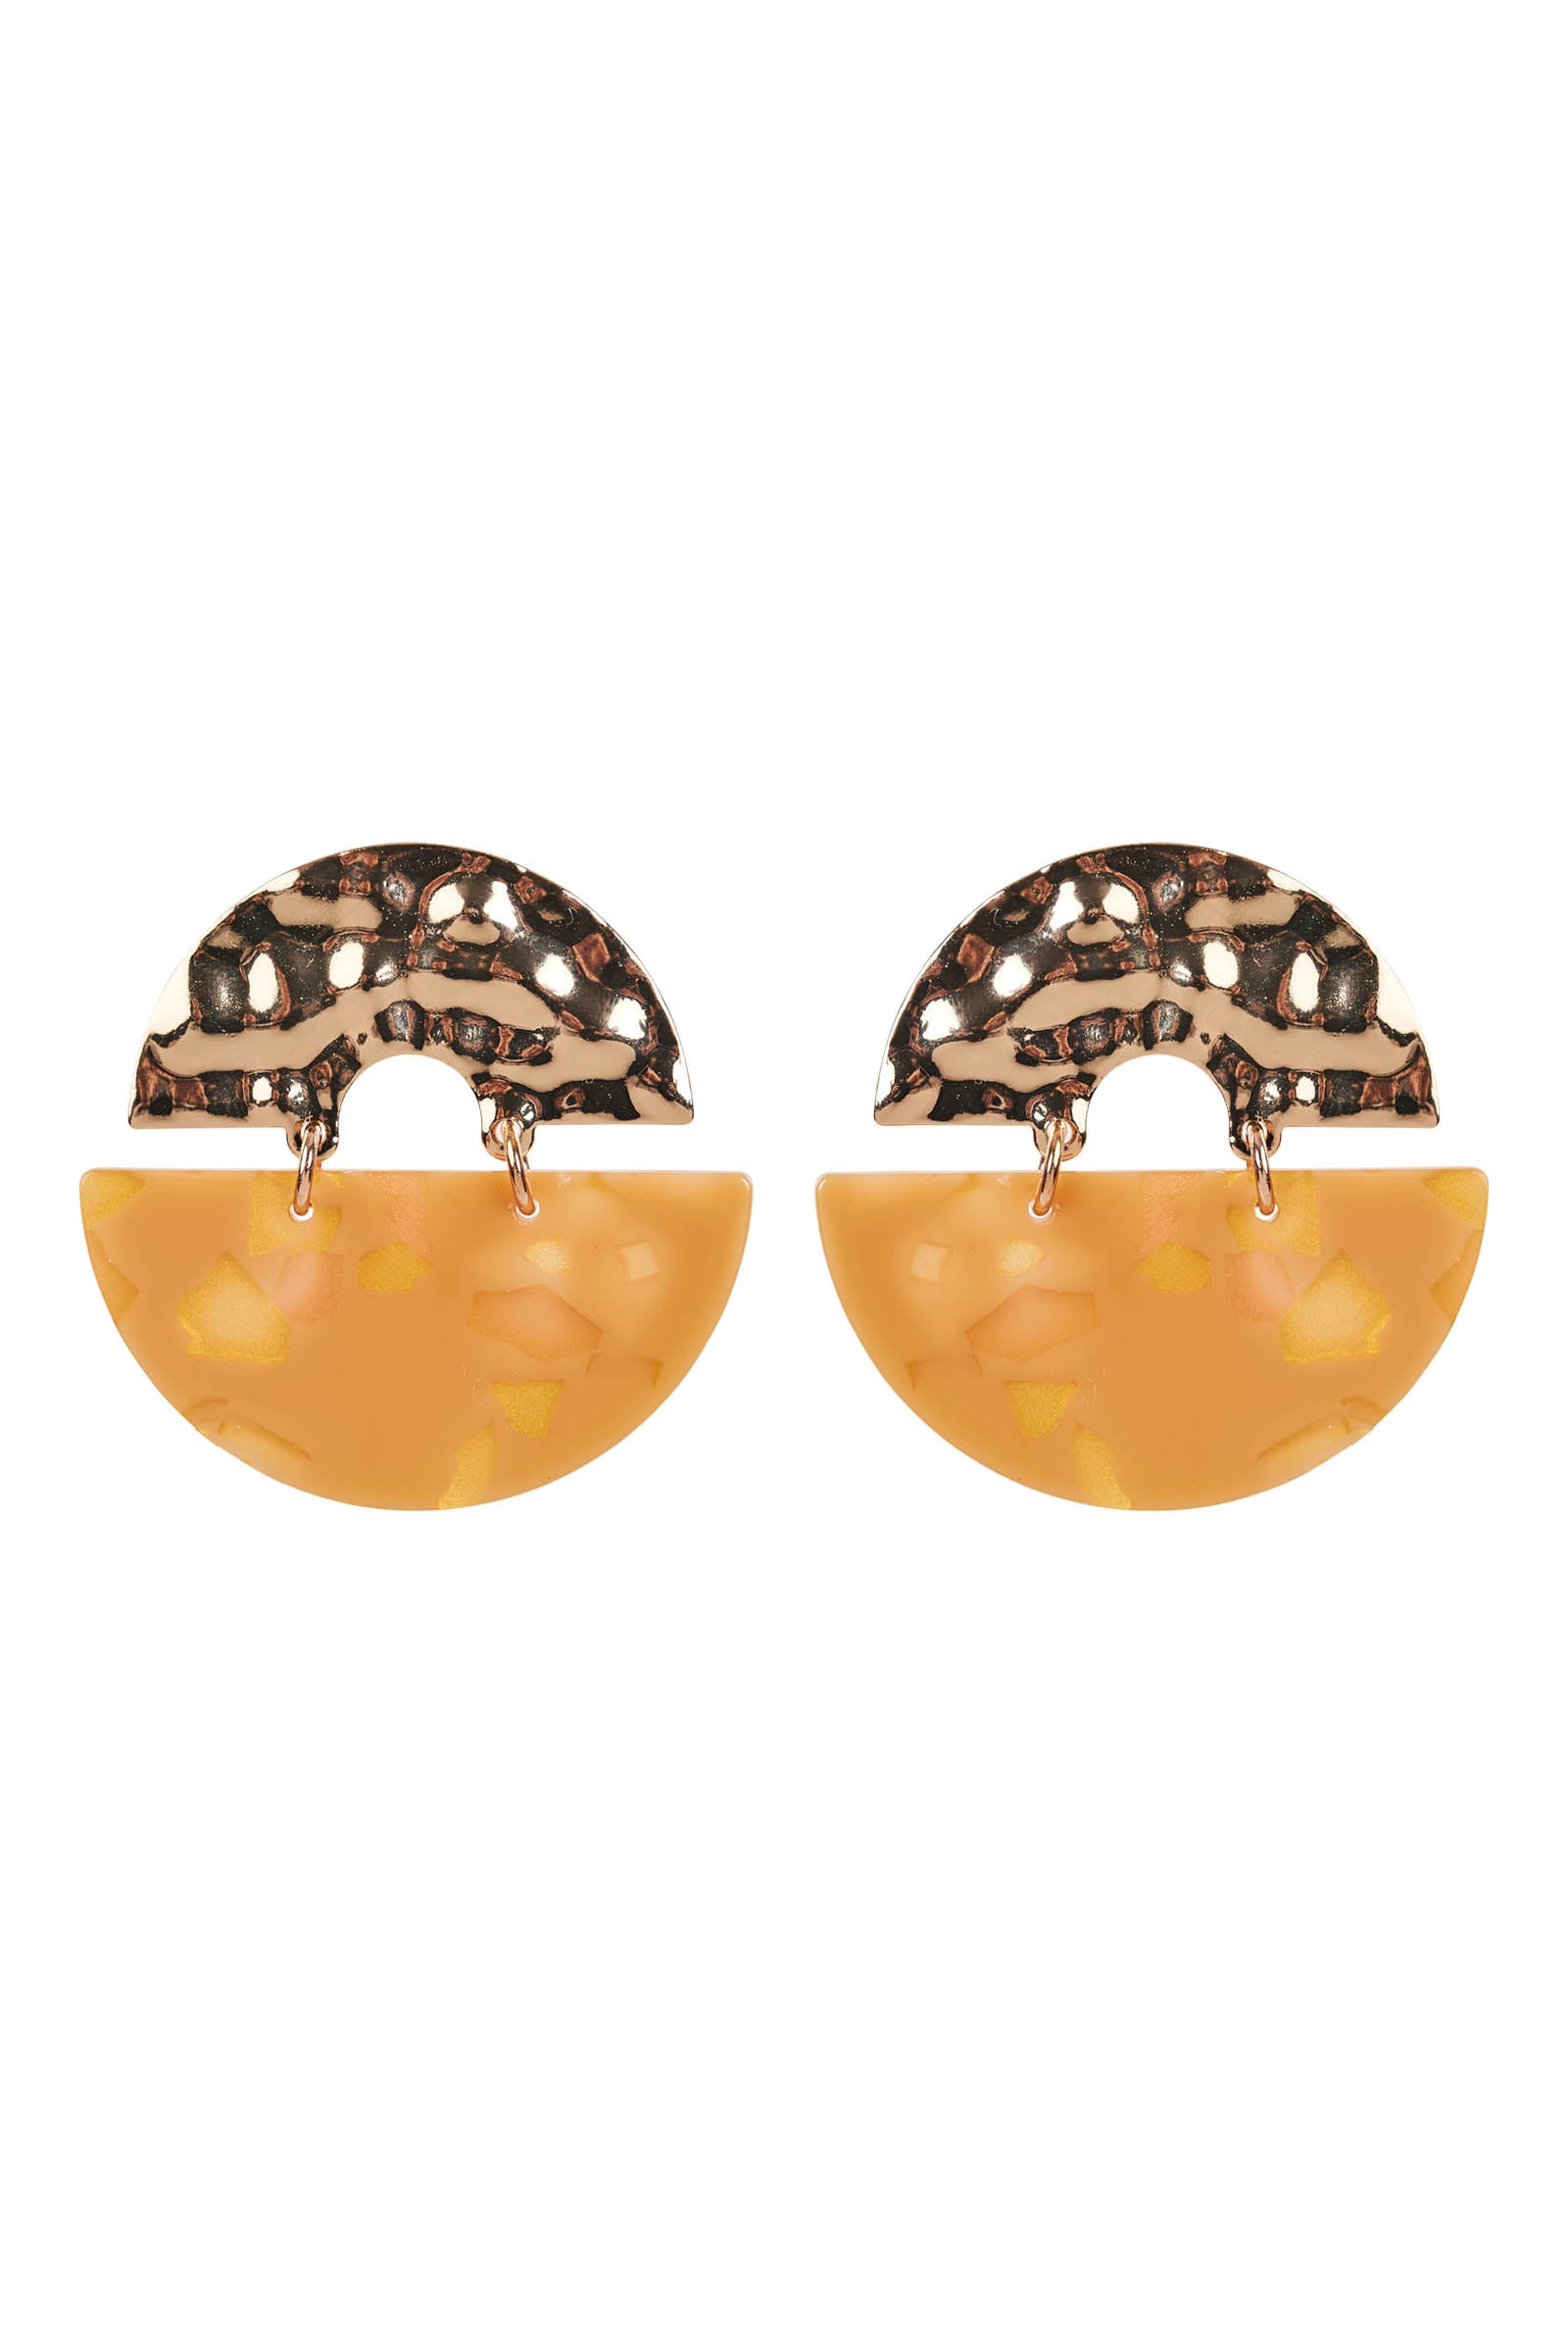 Elan Moon Earring - Honey - eb&ive Earring